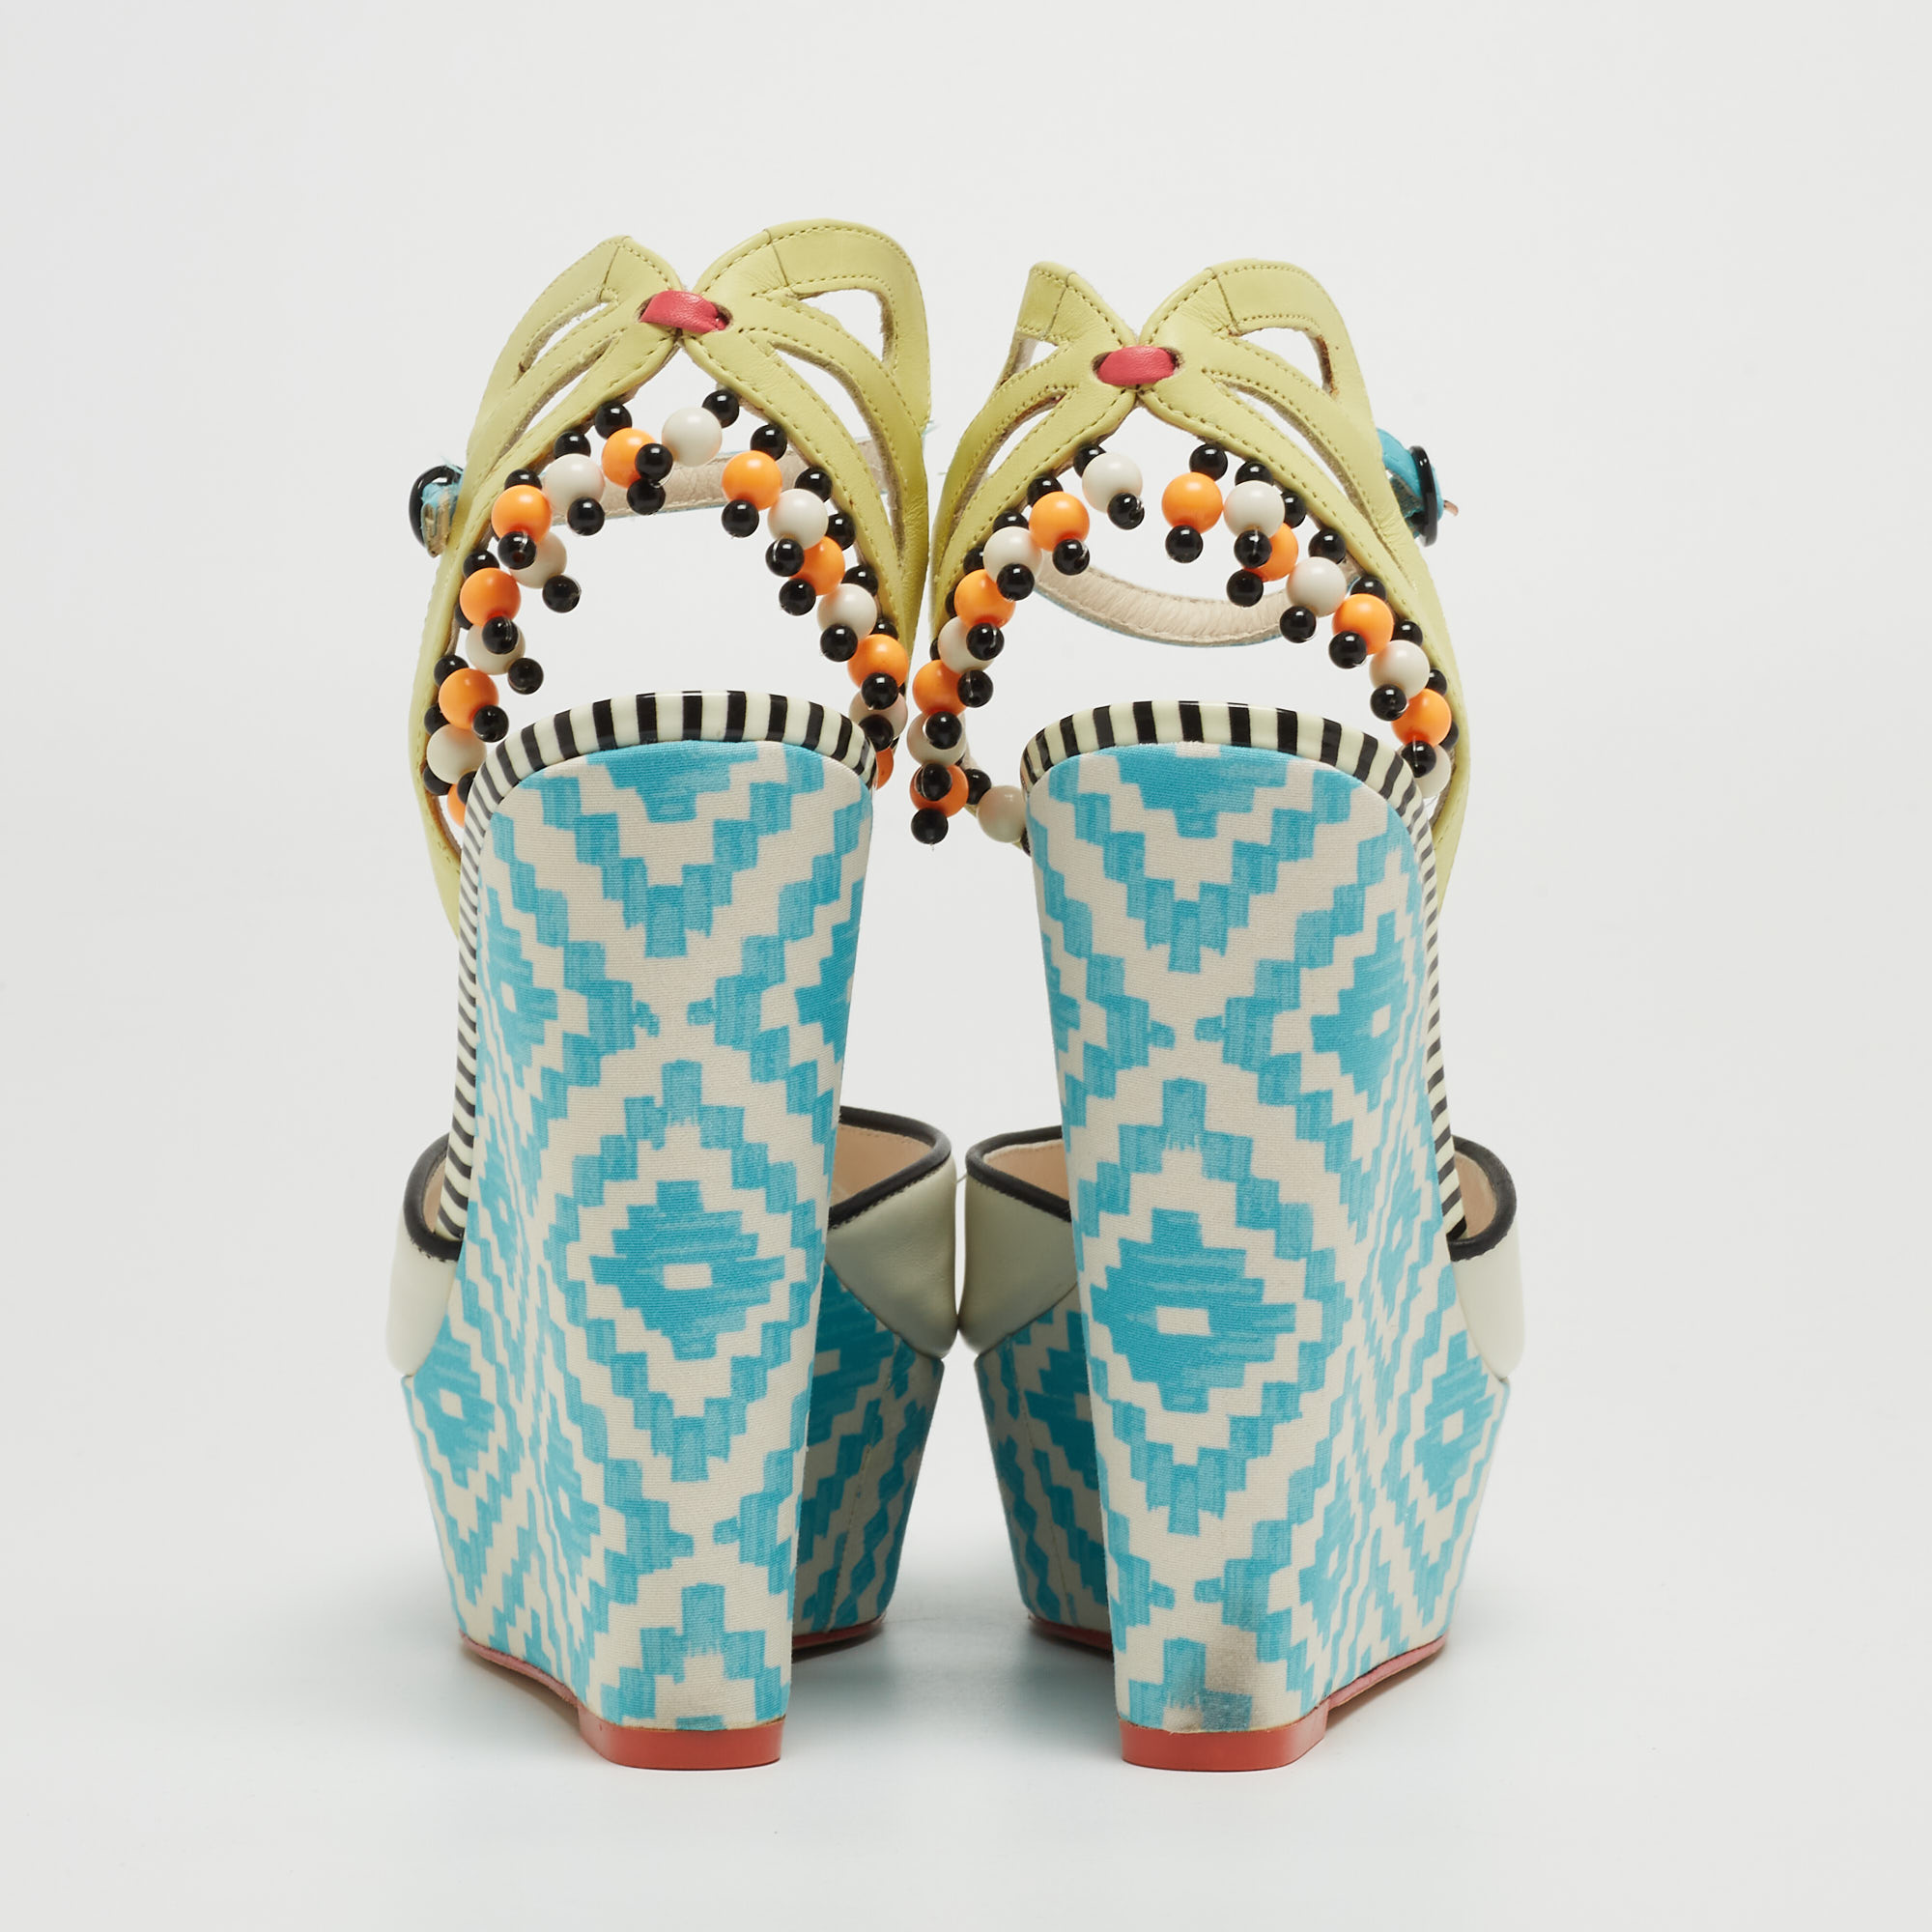 Sophia Webster Multicolor Printed Leather Wedge Sandals Size 36